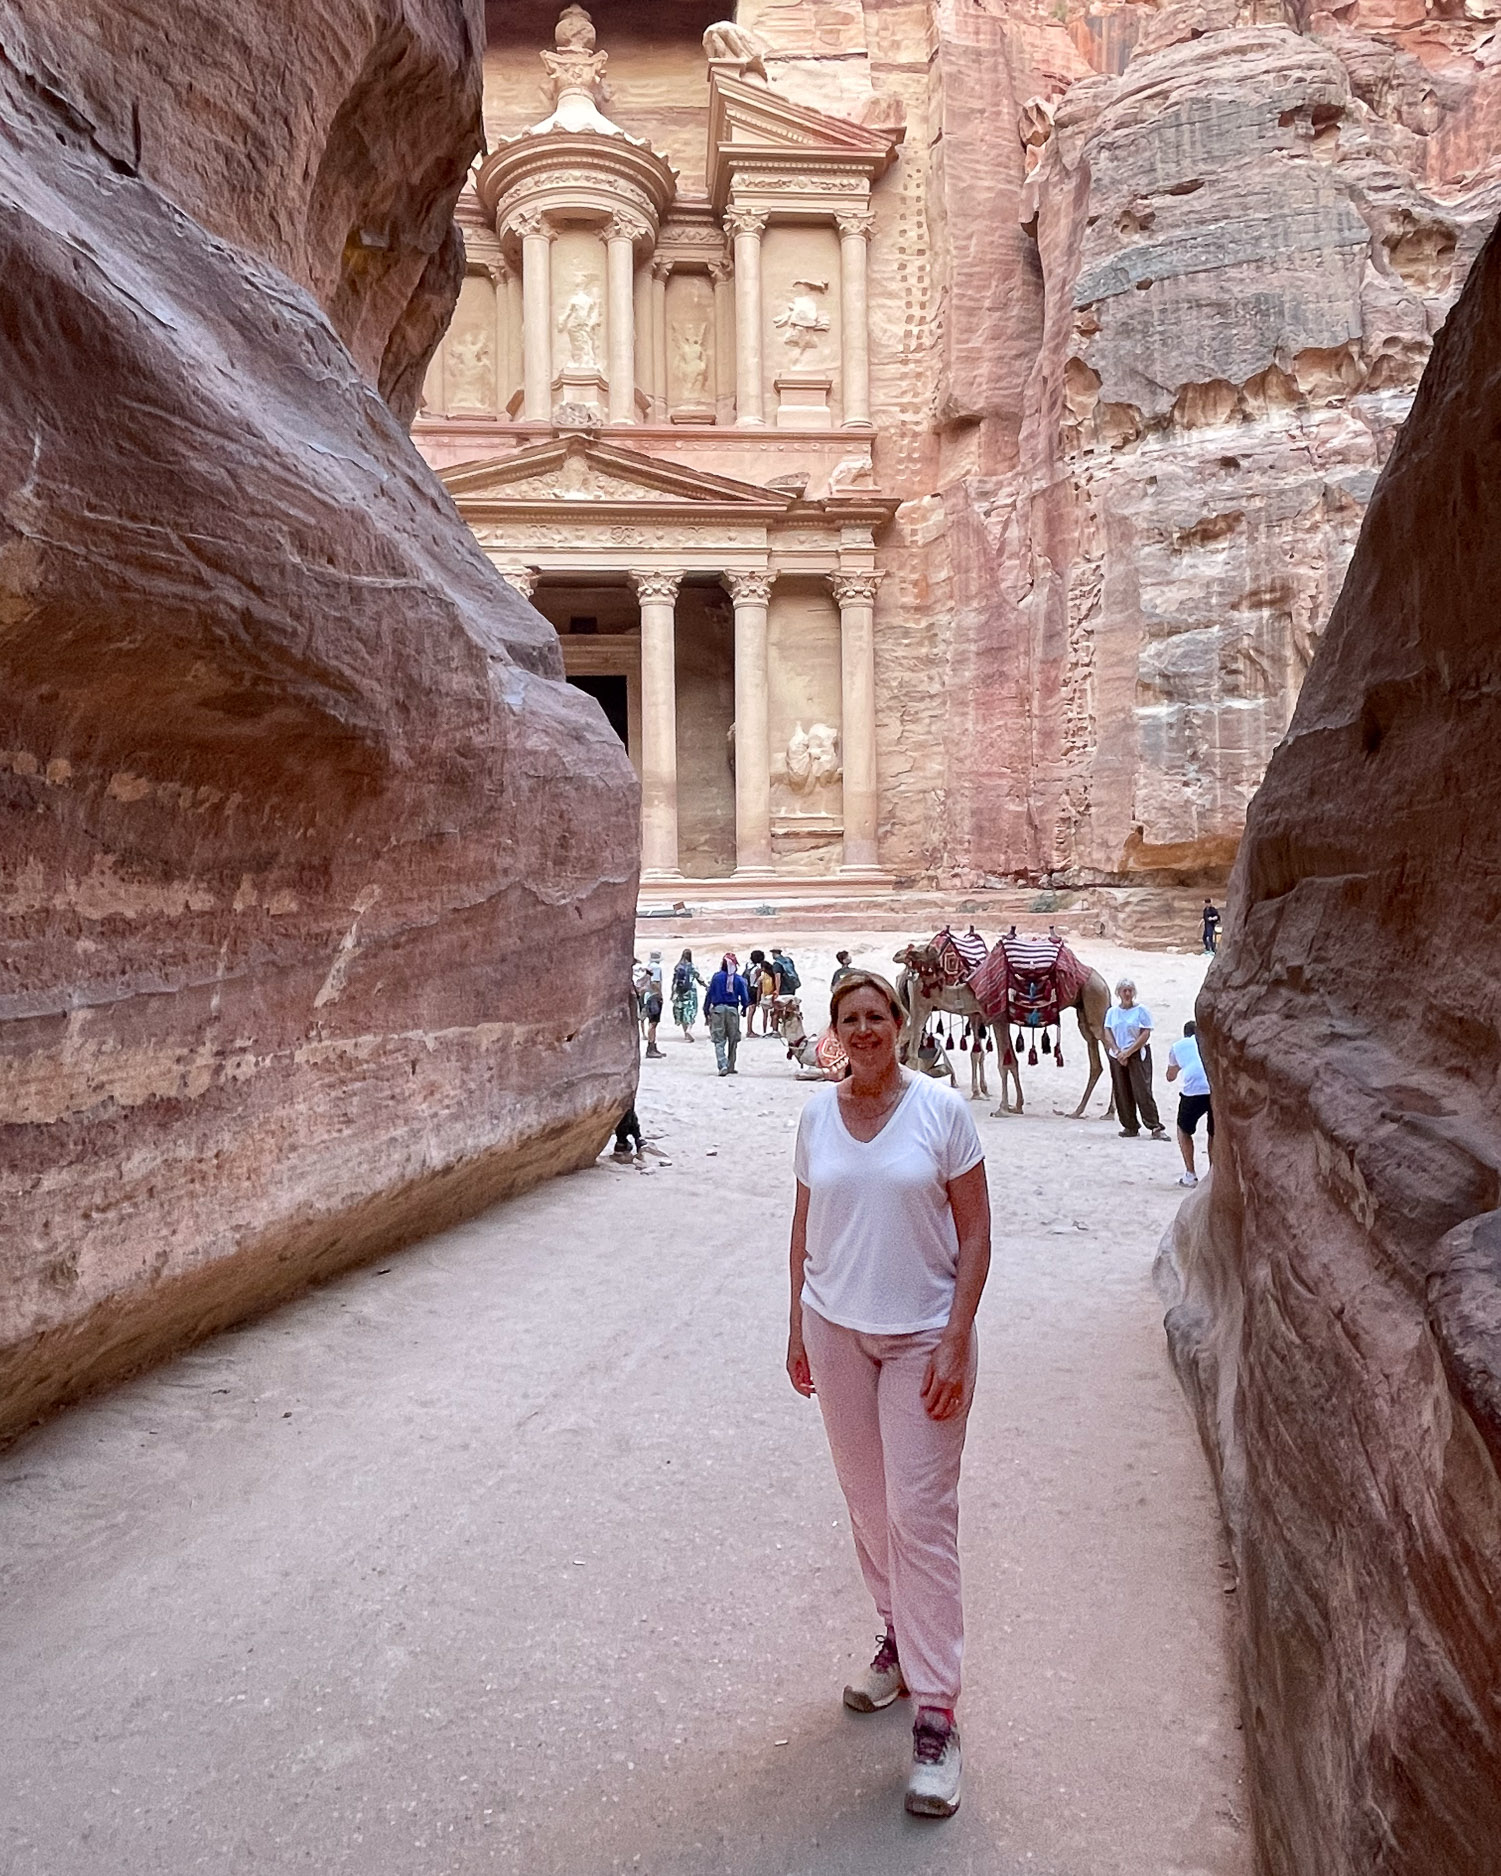 Things to do in Petra Jordan - The Treasury Photo Heatheronhertravels.com